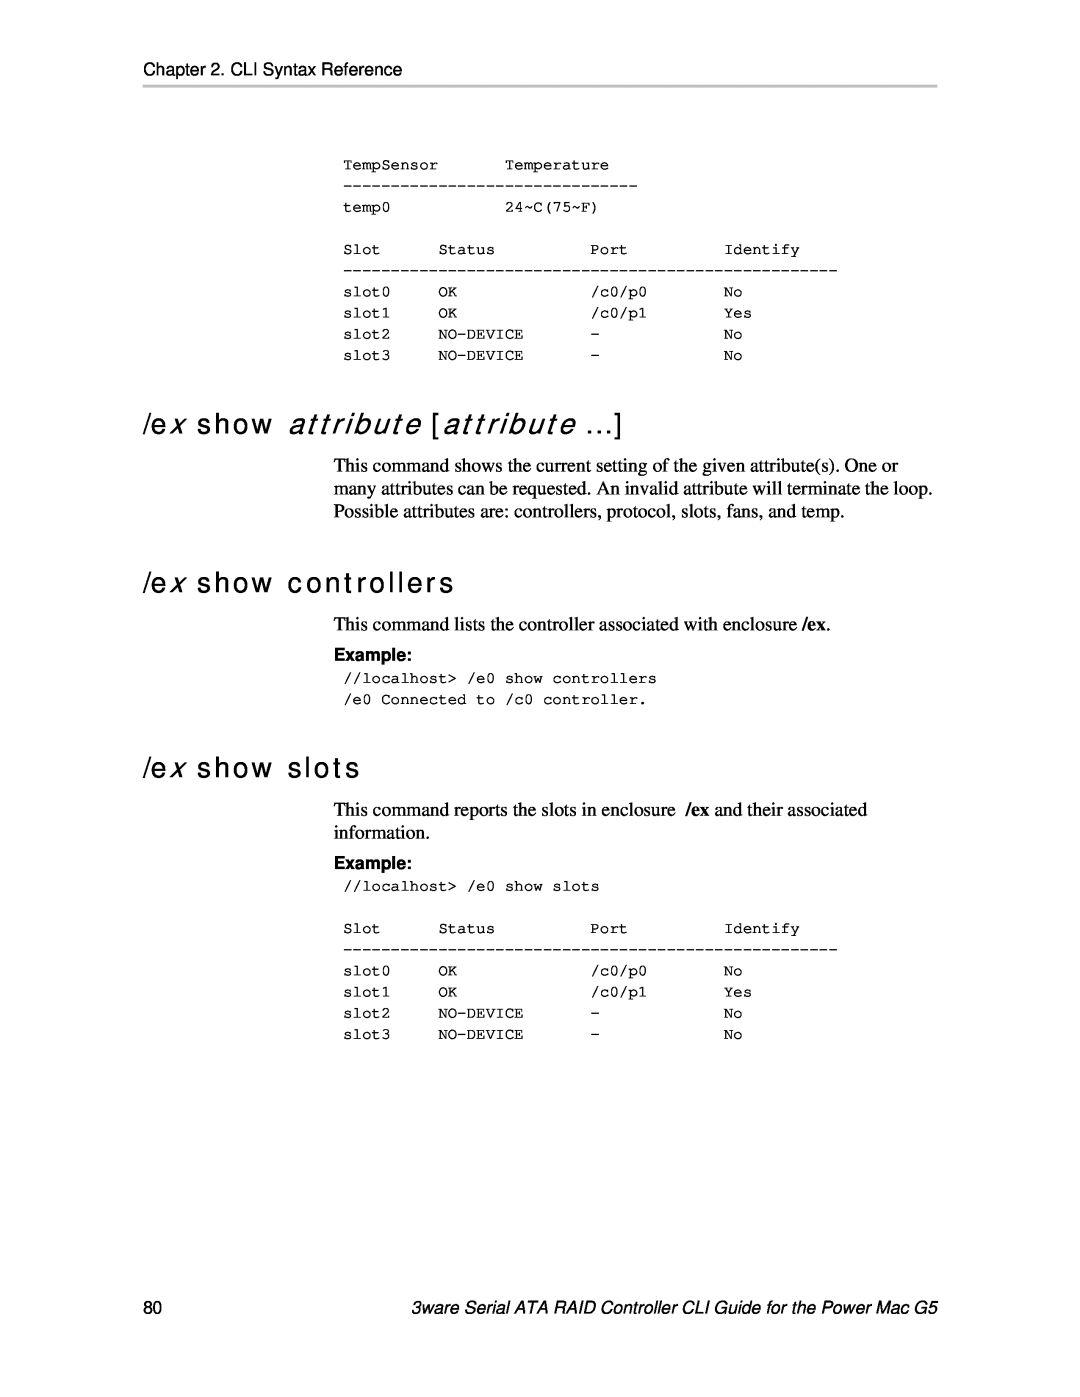 AMCC 9590SE-4ME manual ex show attribute attribute, ex show controllers, ex show slots 